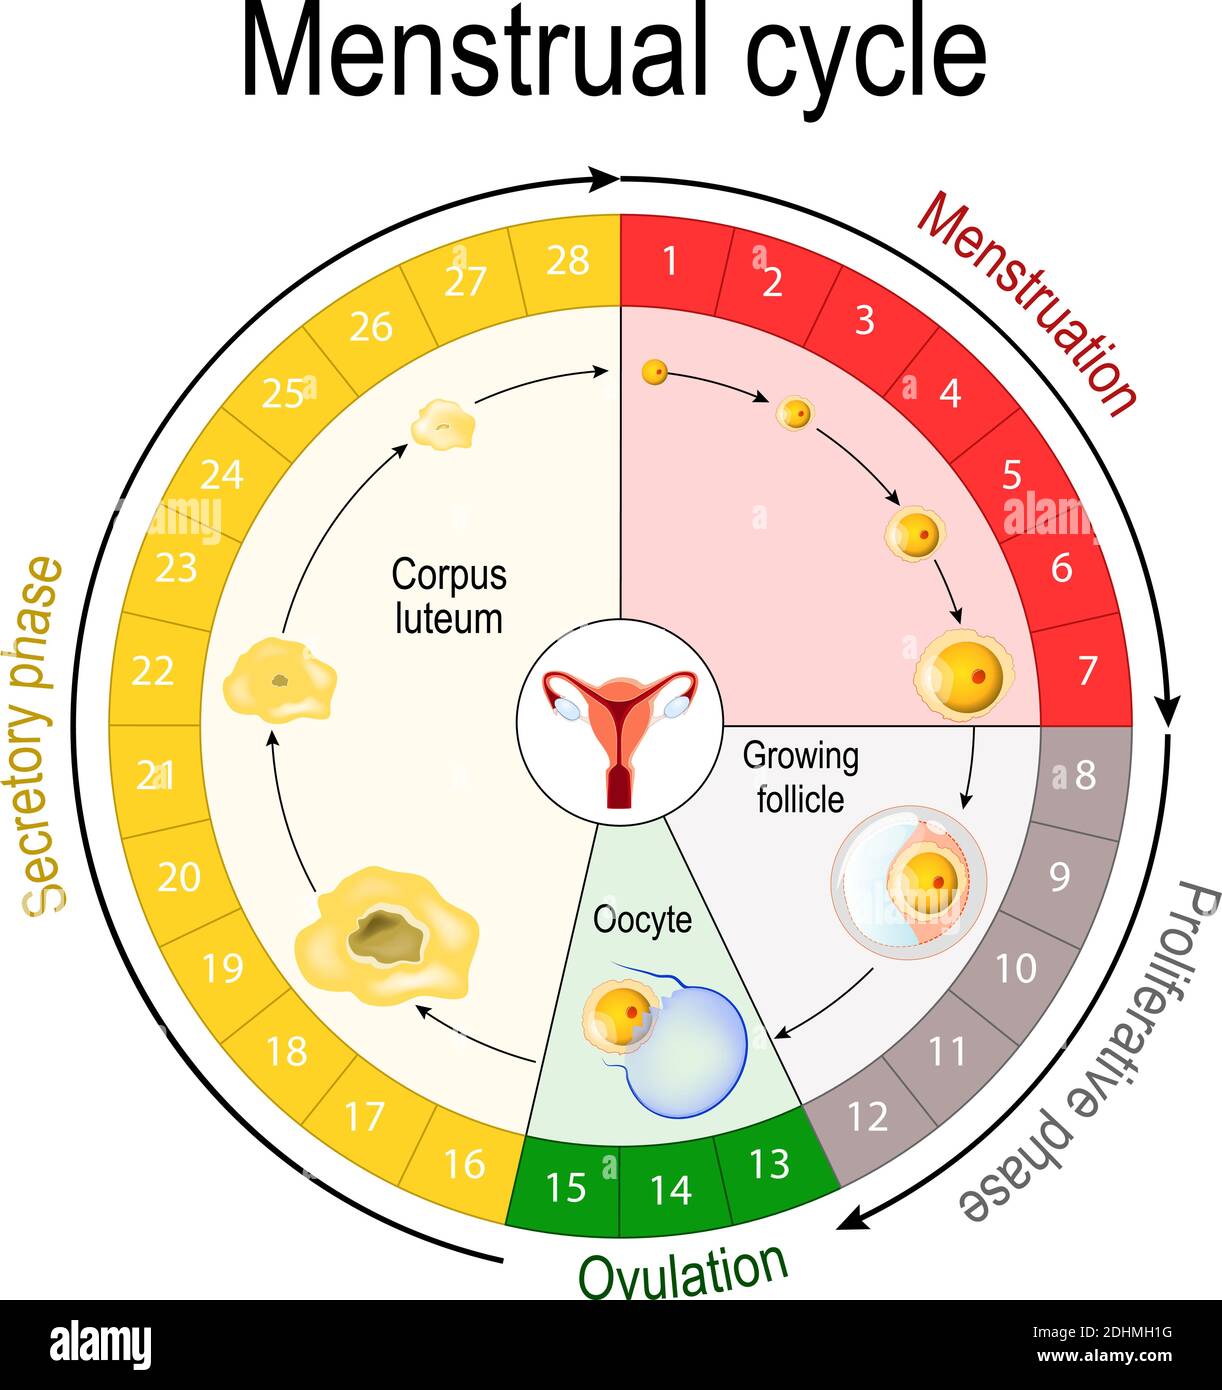 Démystifier le Cycle Menstruel : Vérités et Mythes